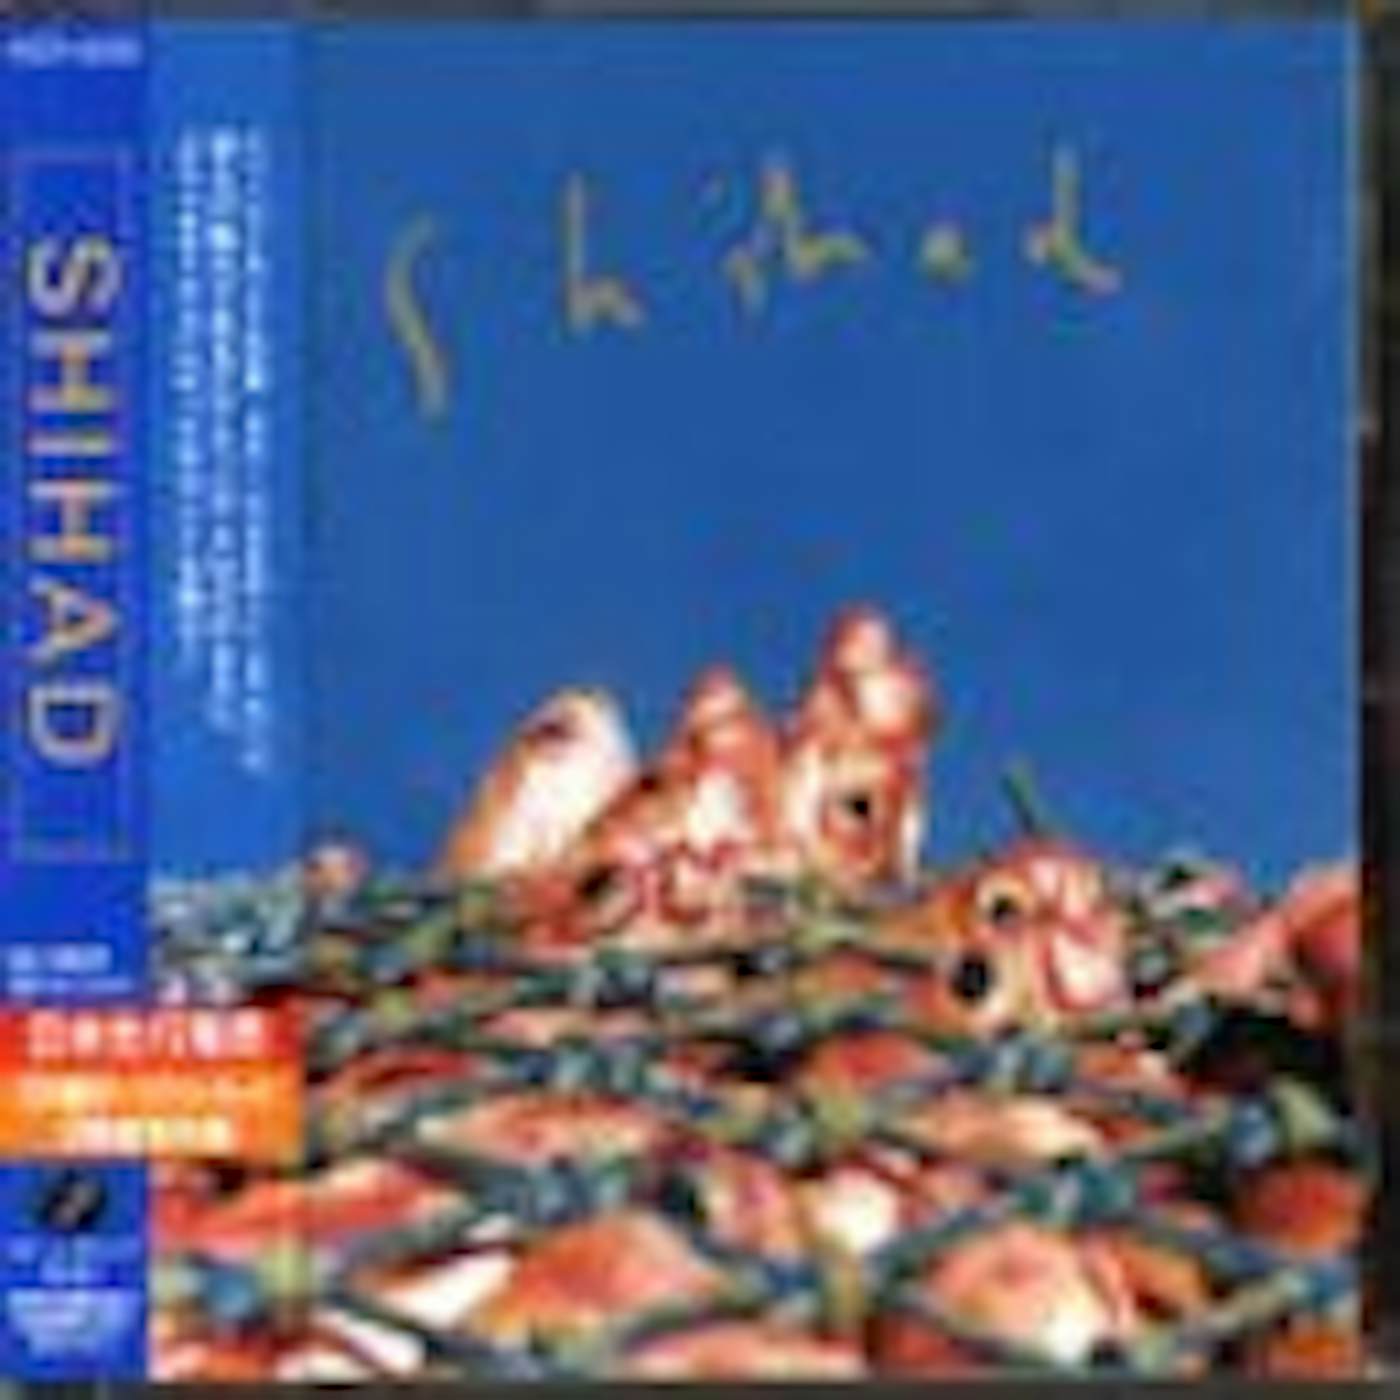 SHIHAD (16 TRACKS) CD